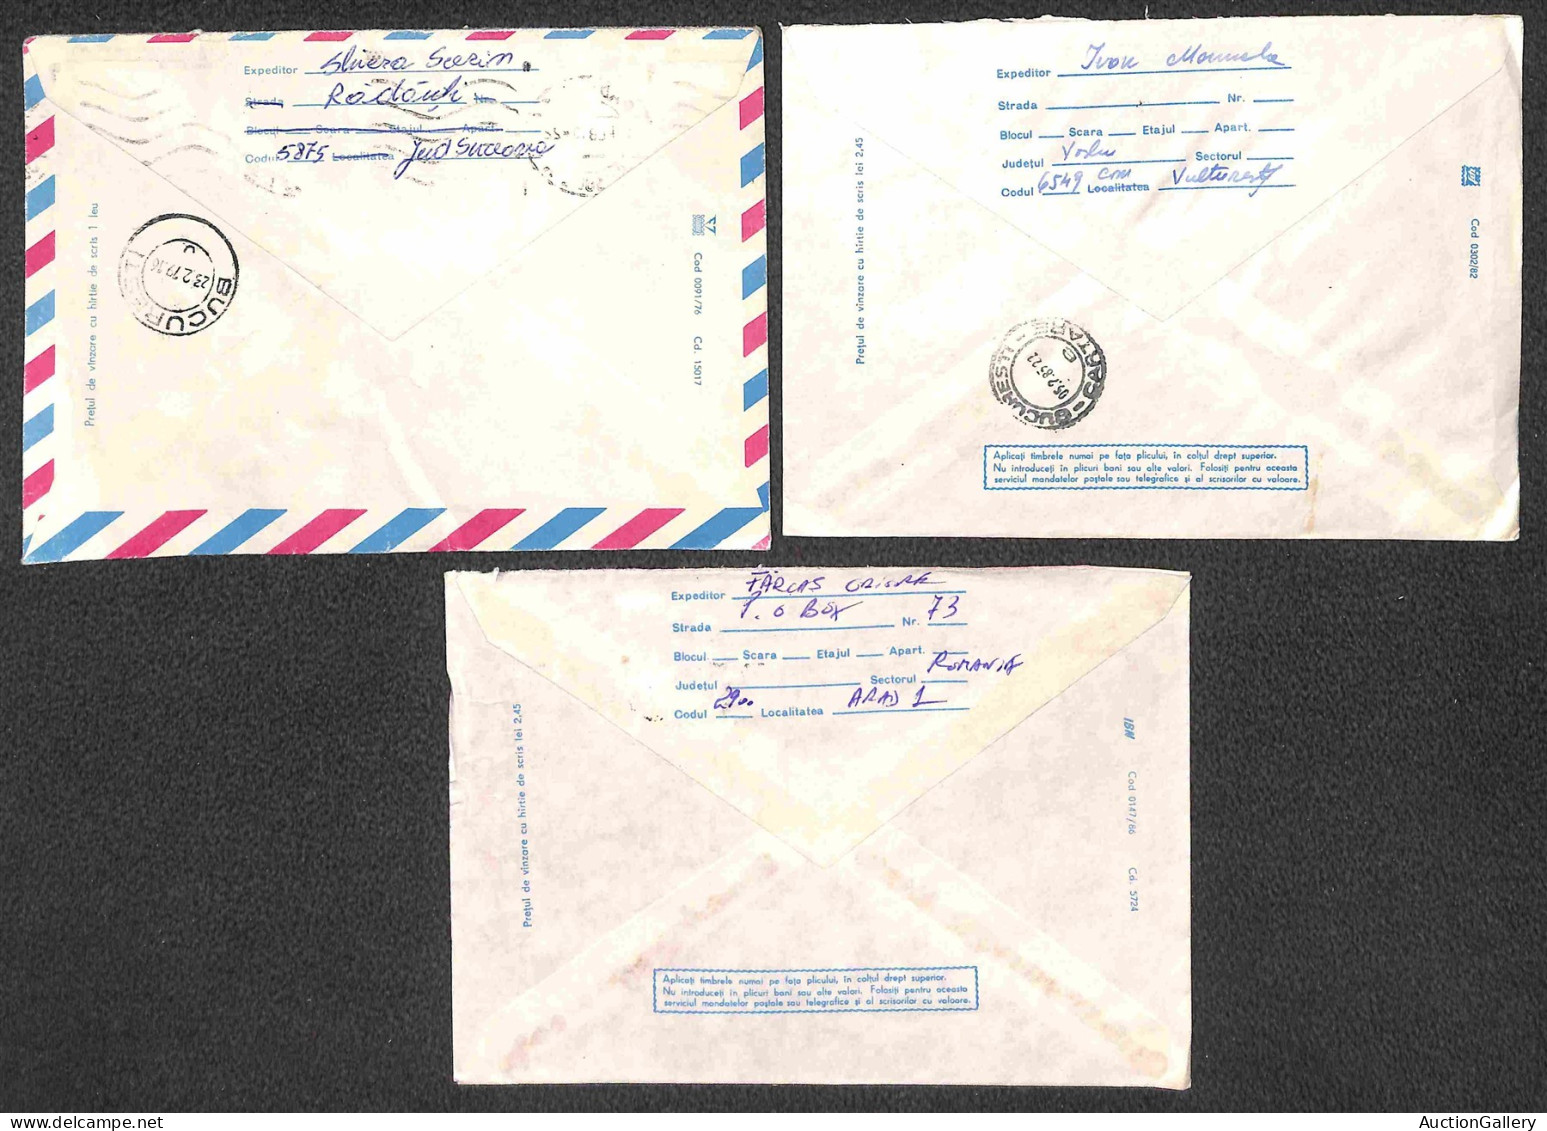 Europa - Romania - 1974/1986 - Aerogrammi postali (illustrati) - 12 usati (3 raccomandati) + 1 nuovo + 2 raccomandati pe